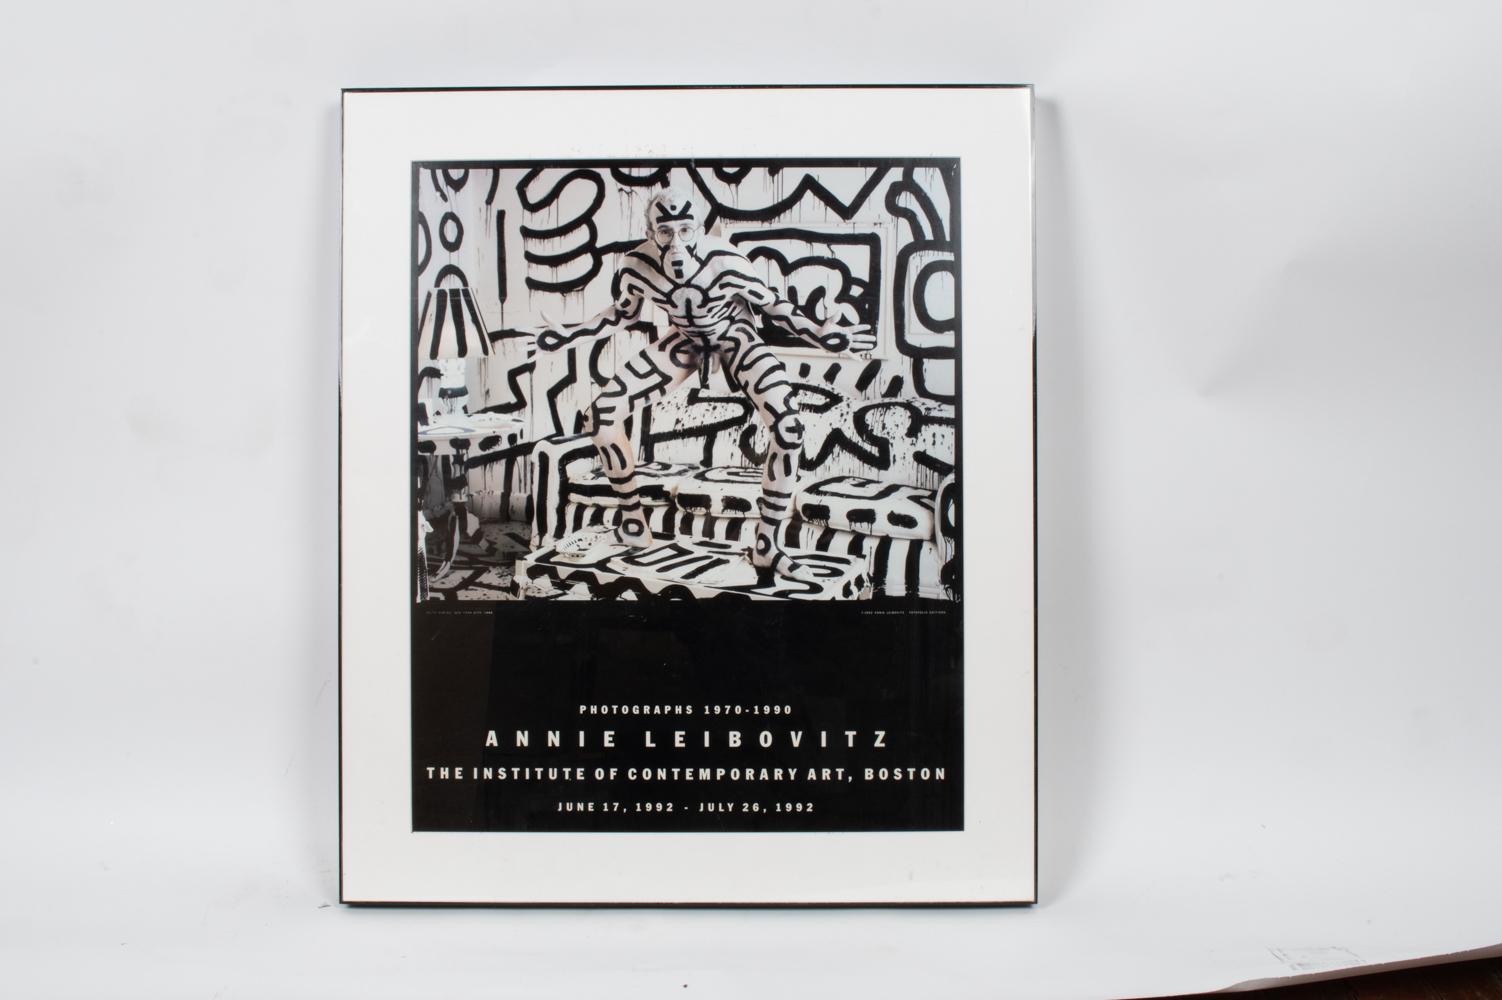 Américain Annie Leibovitz, affiche de l'exposition ICA de Boston de 1992, Keith Haring